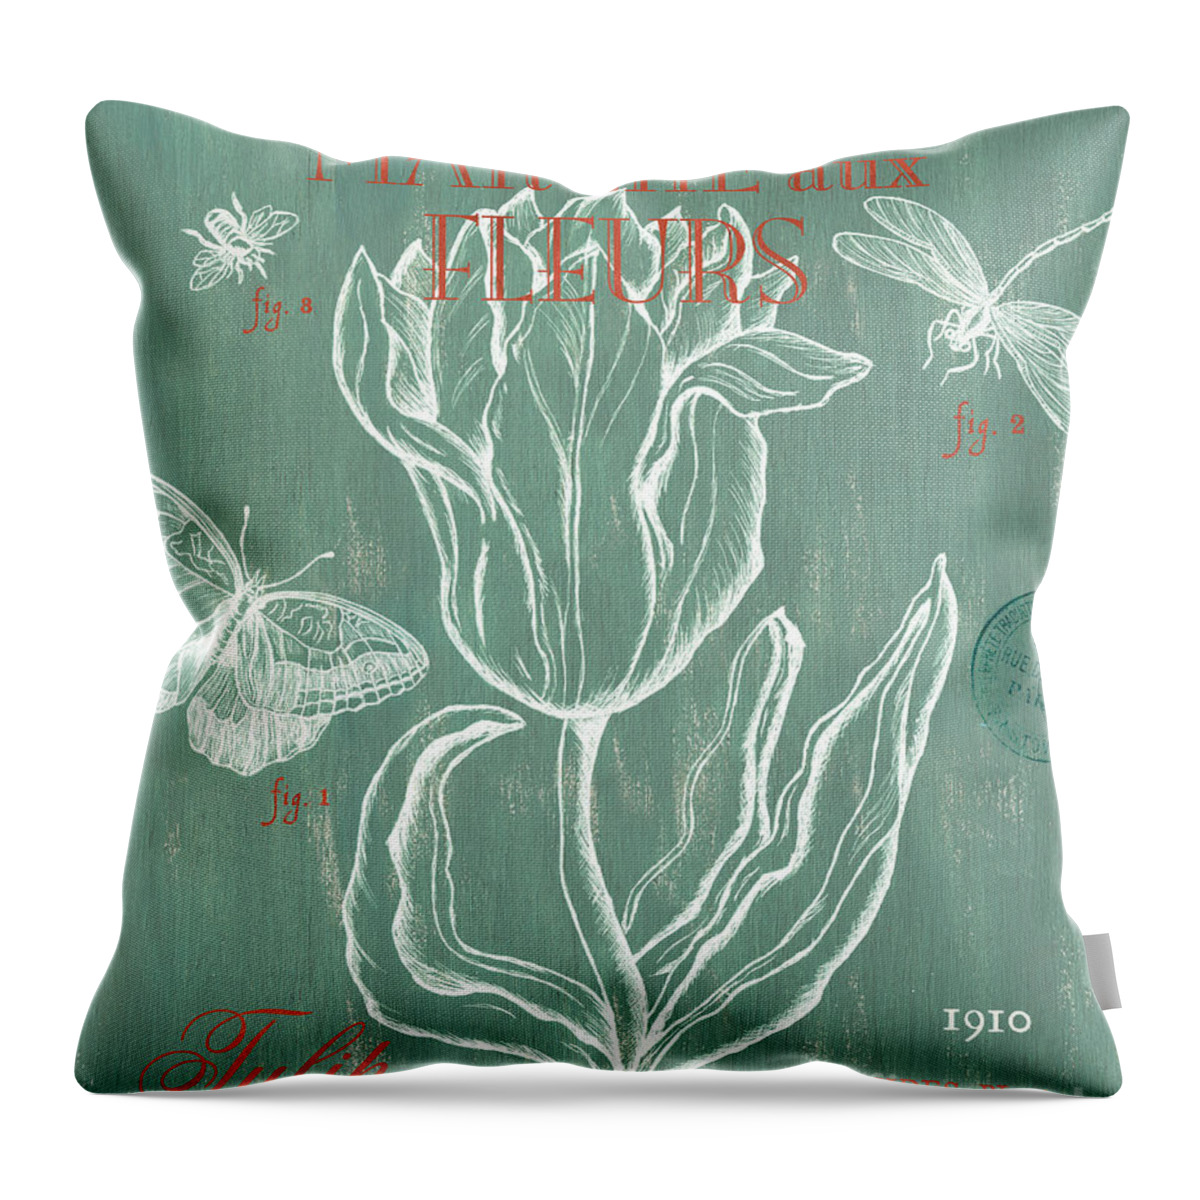 Floral Throw Pillow featuring the painting Marche aux Fleurs by Debbie DeWitt